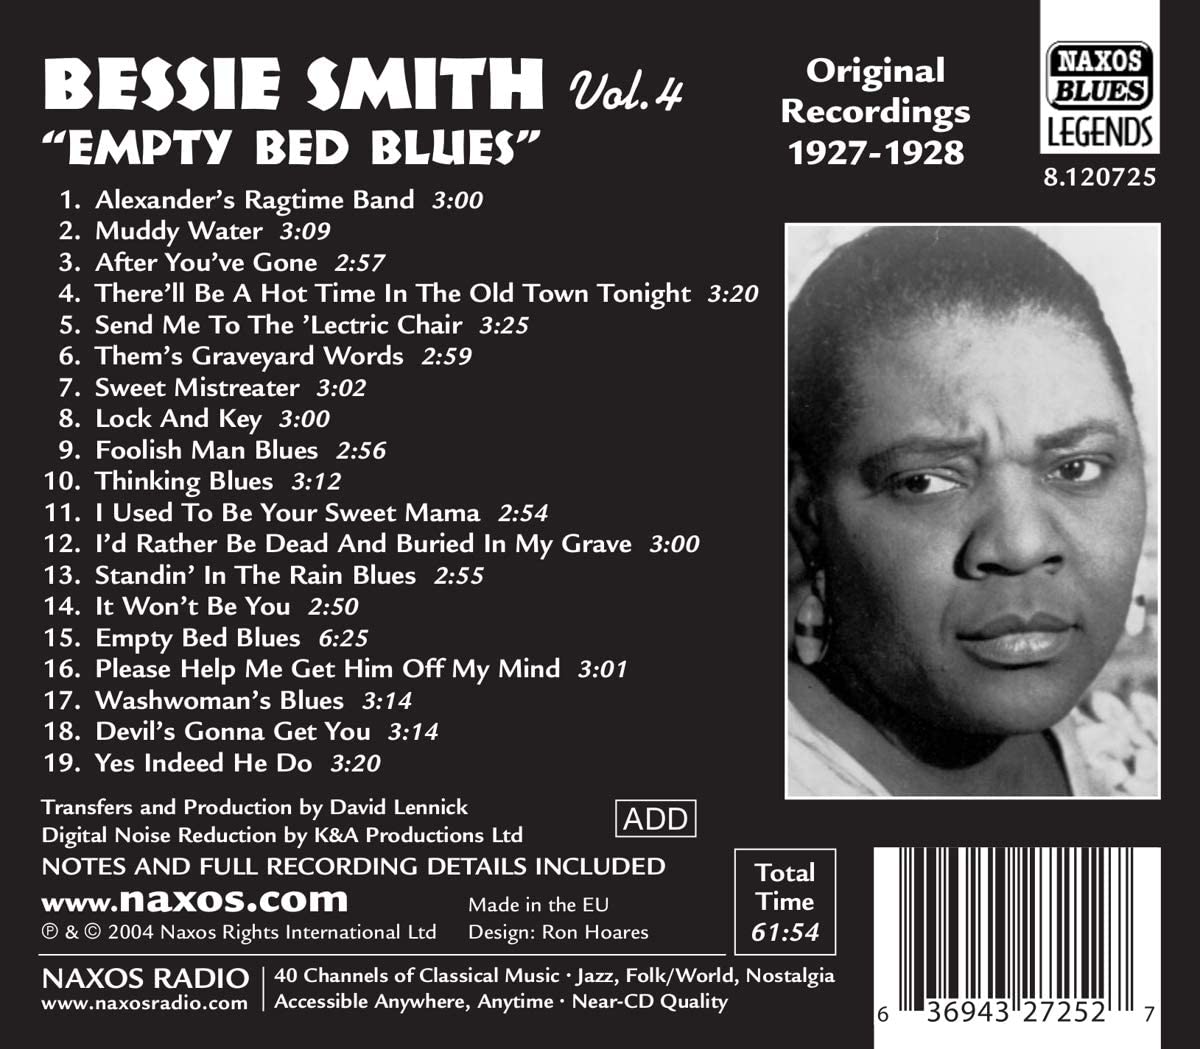 Bessie Smith ‎– Vol. 4 - Empty Bed Blues - Original Recordings 1927-1928 - slide-1